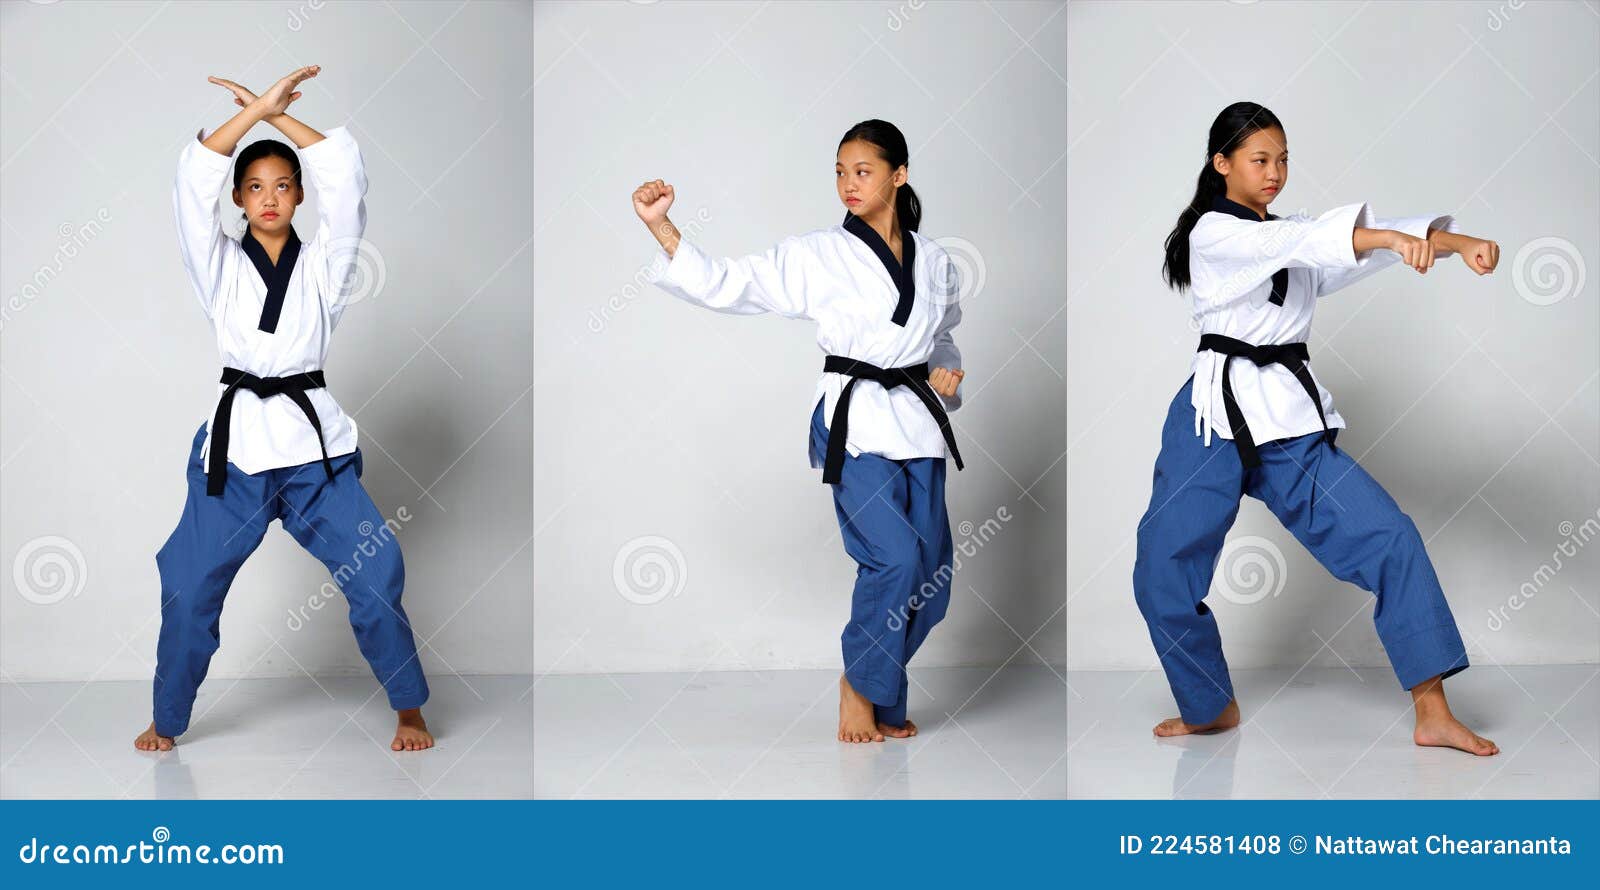 12 Years Old Teenager Wear TaeKwonDo Karate Uniform Stock Photo - Image of fight: 224581408